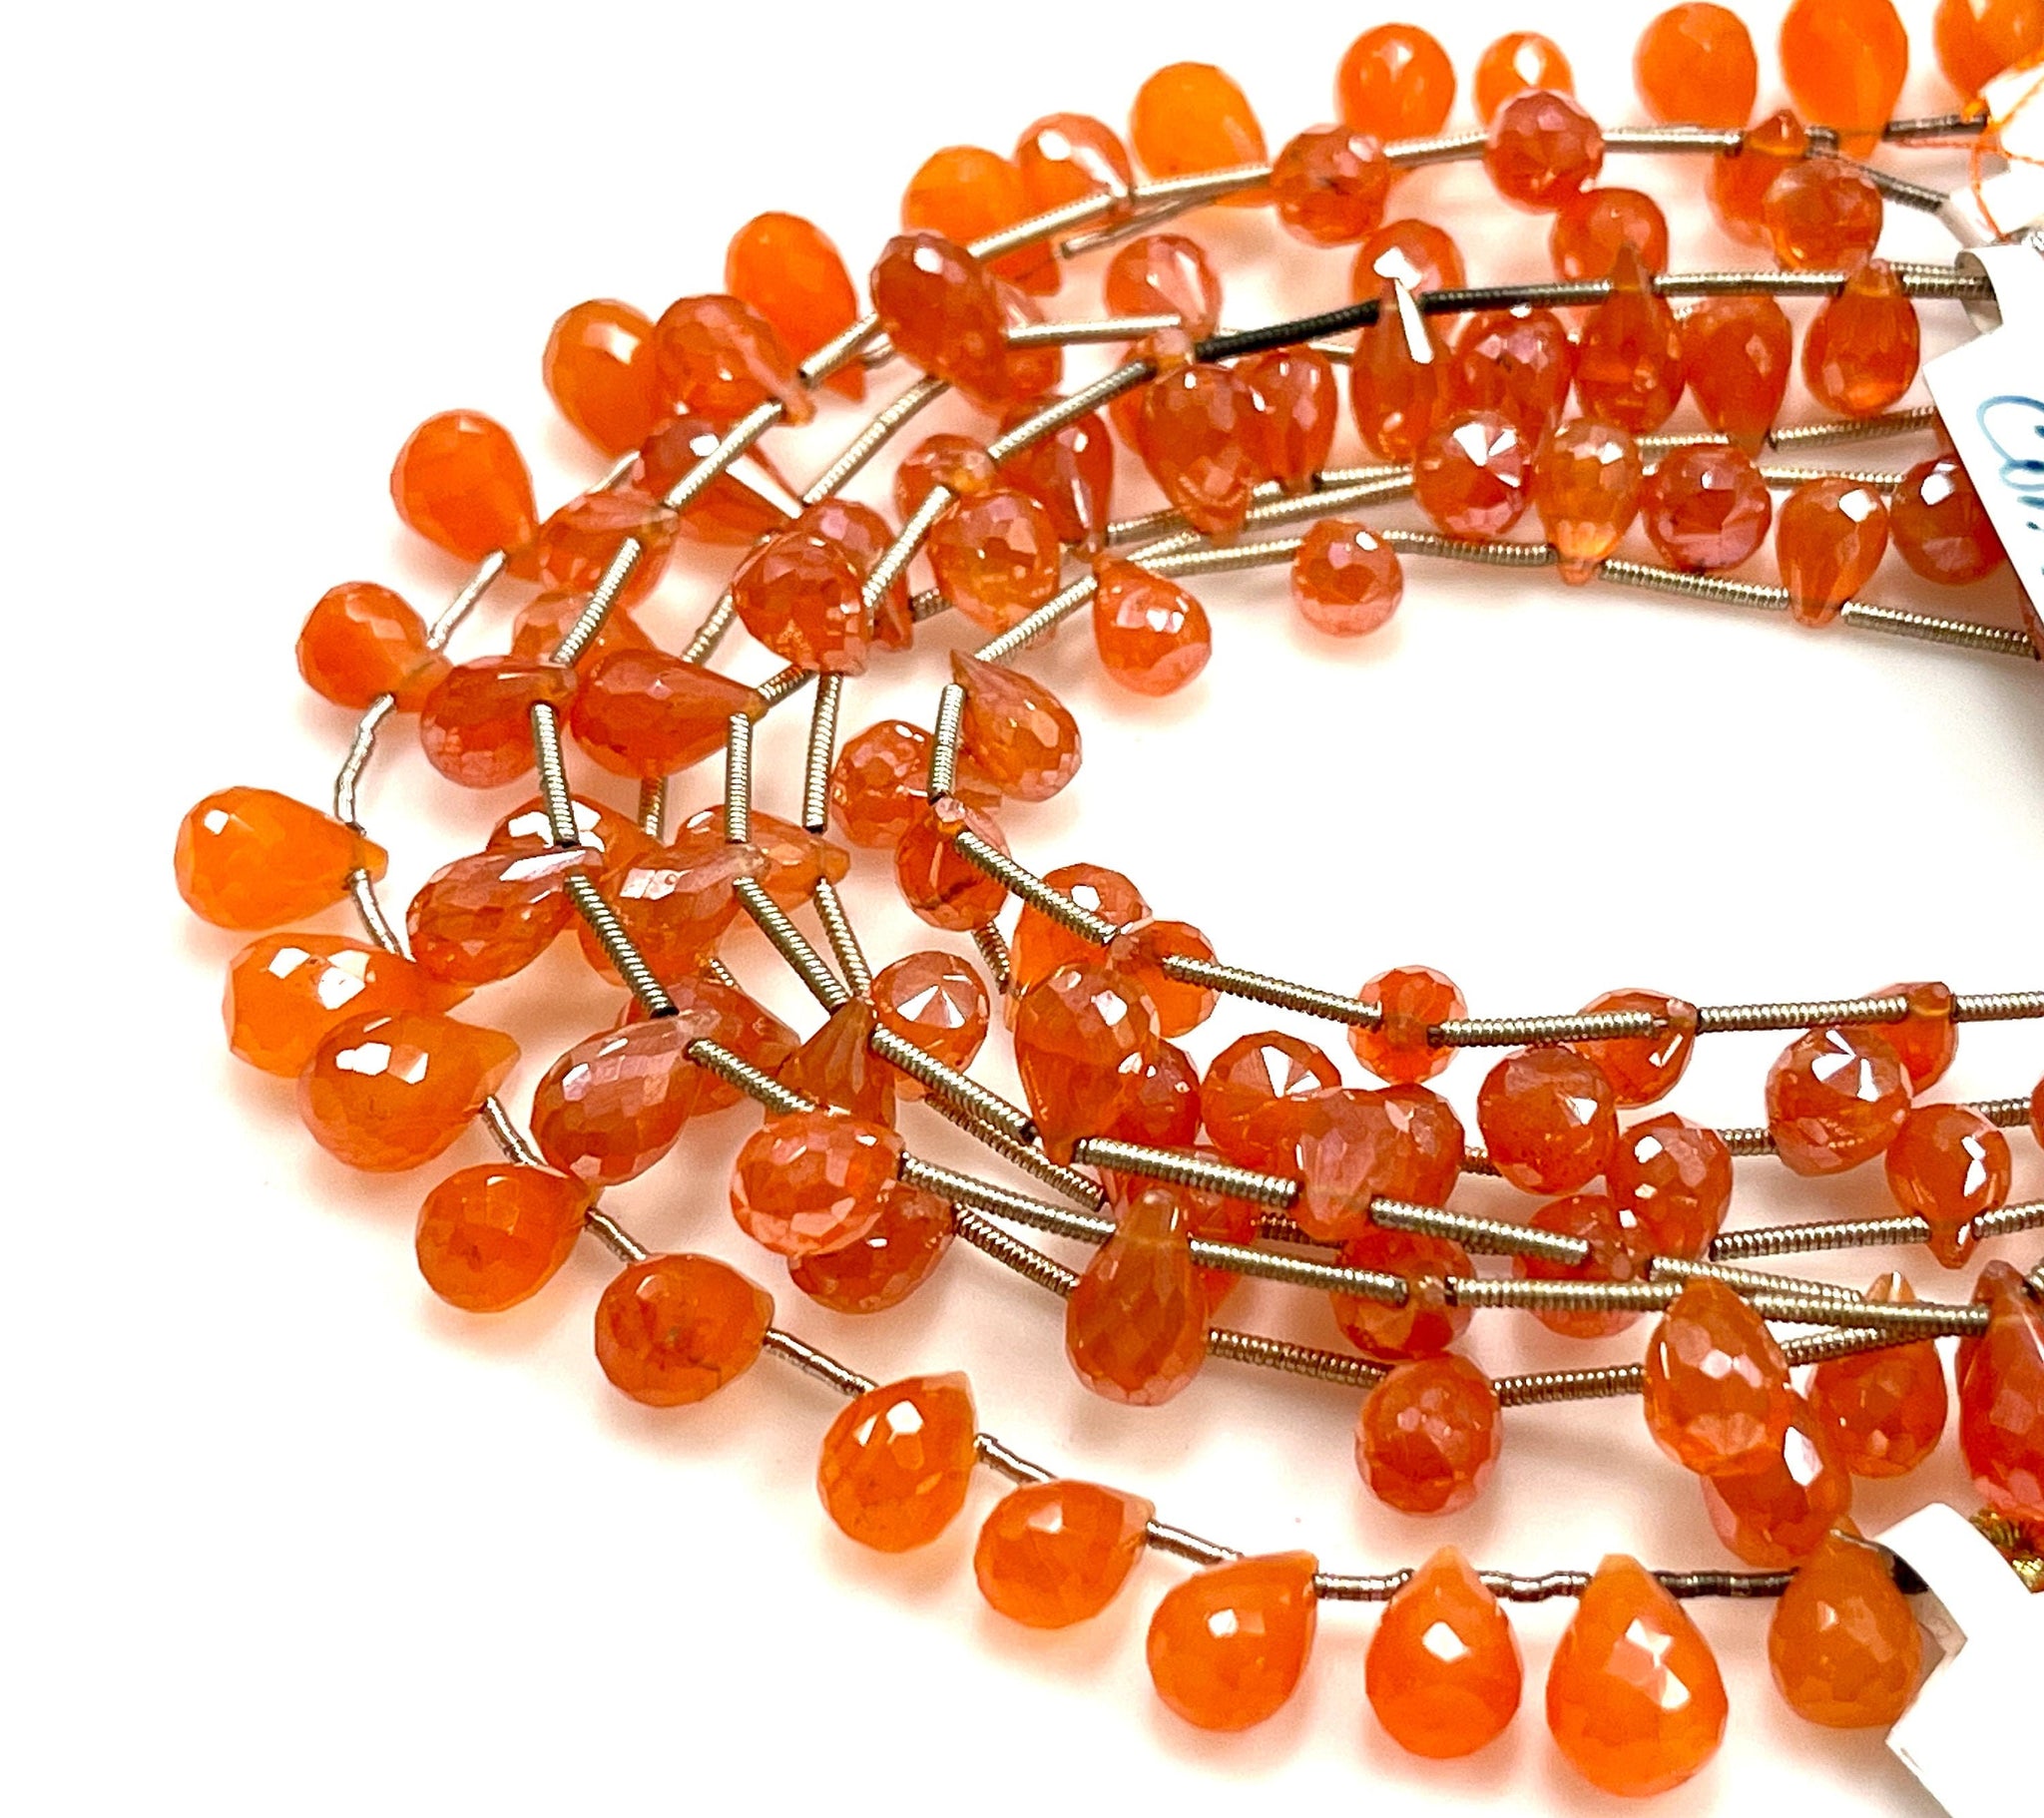 Carnelian Natural Gemstone Mystic Coated Tear Drops Briolette Handmade Beads 7x5mm Orange Beads for Jewelry Making, Healing Energy Gemstone